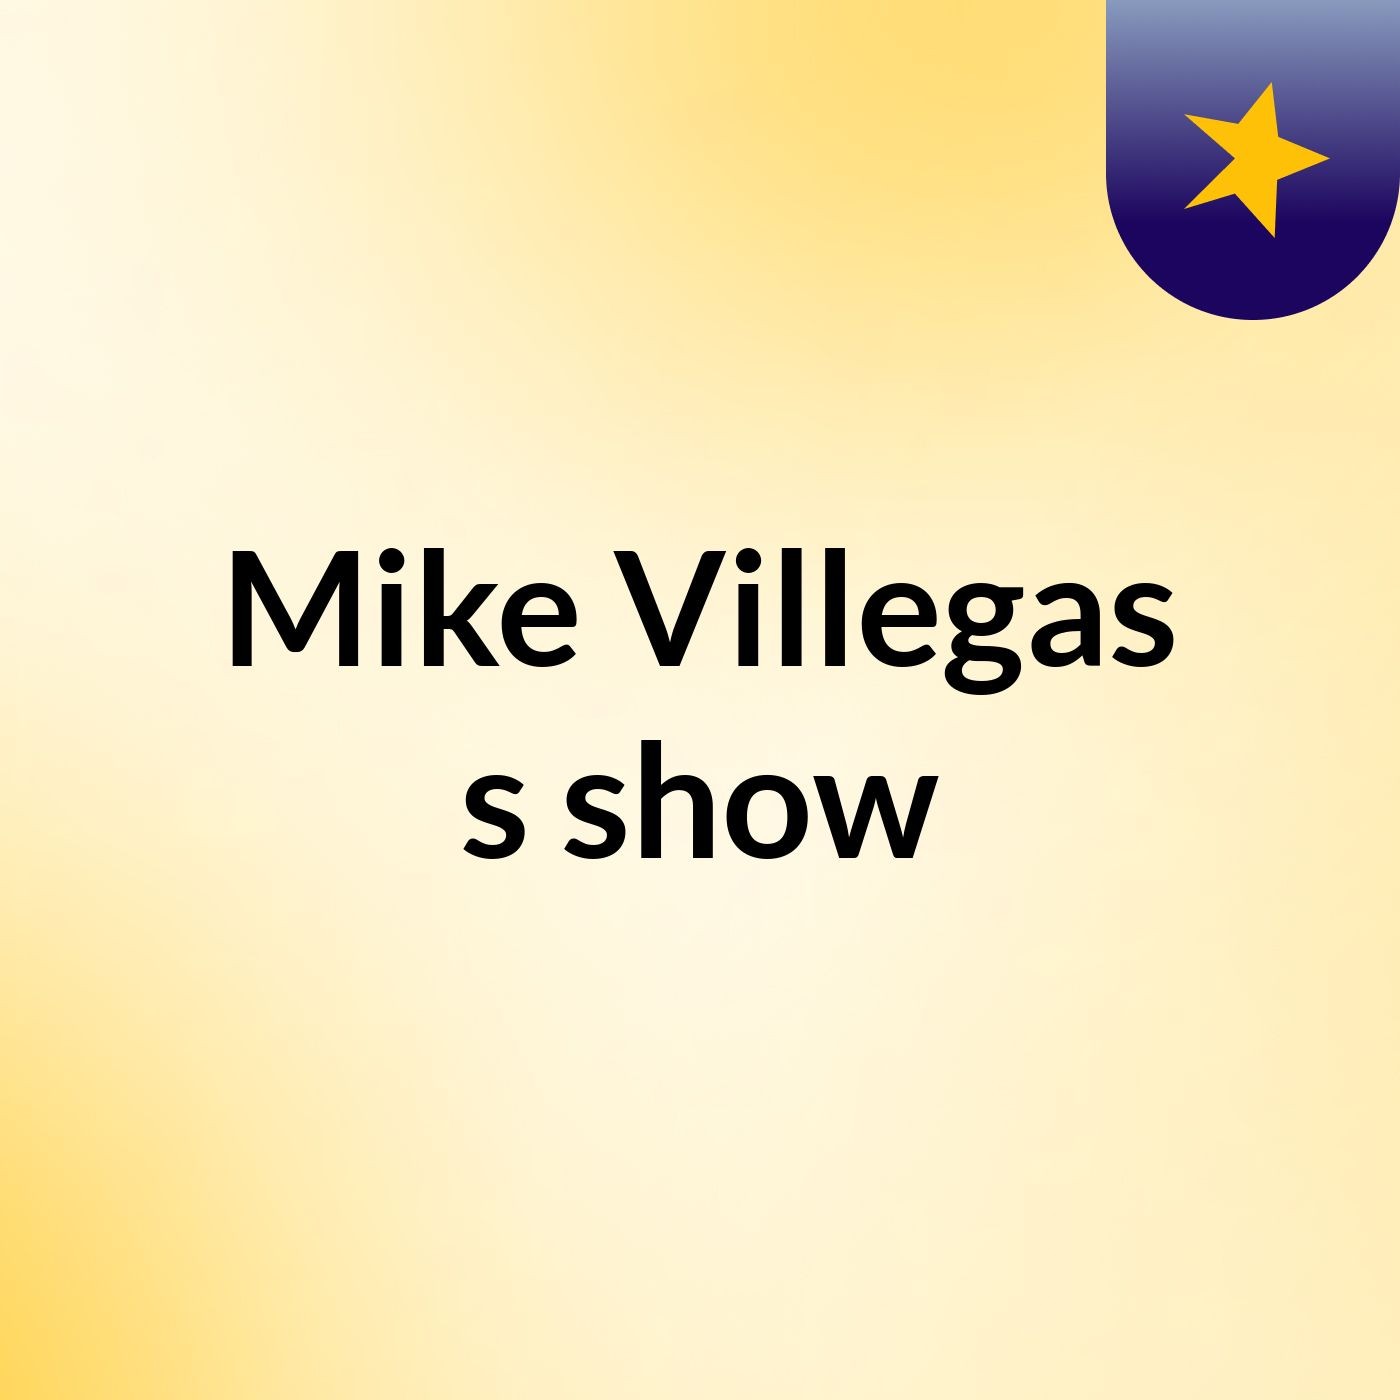 Mike Villegas's show